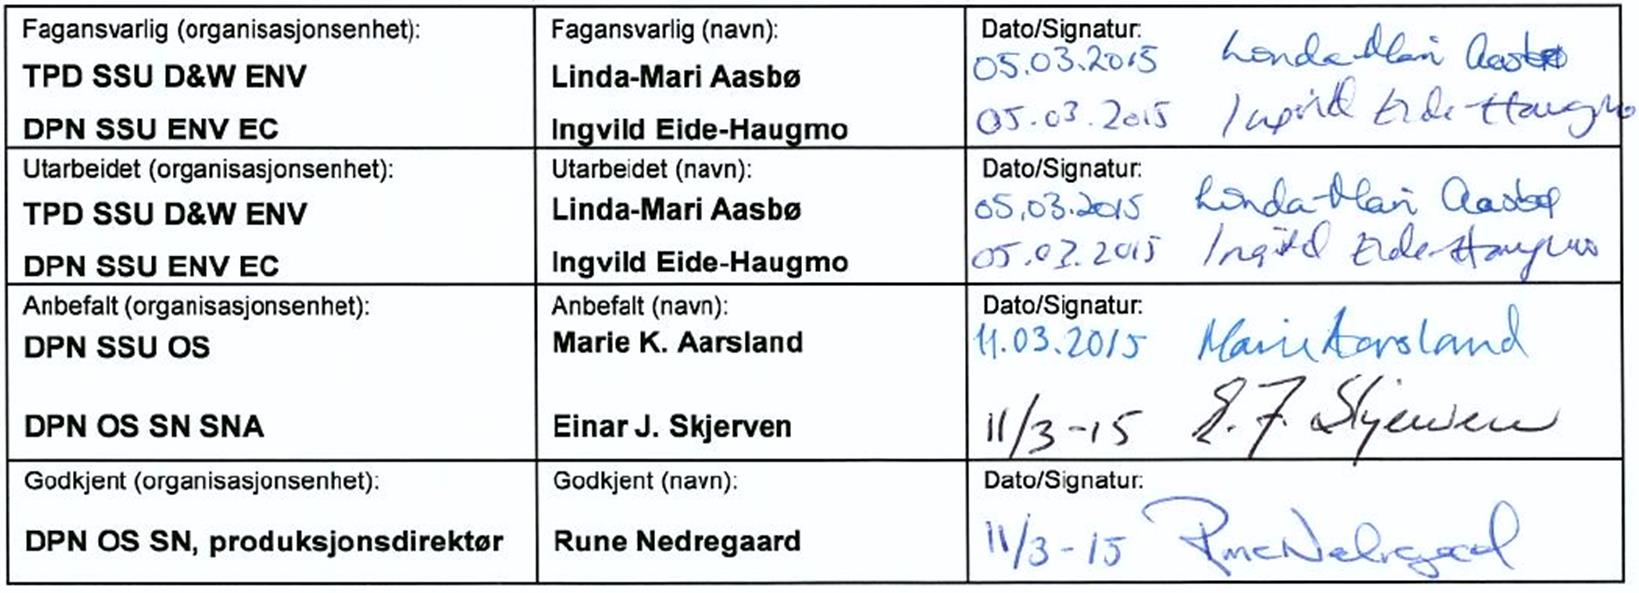 Tittel: Årsrapport til Miljødirektoratet 2014 - Vigdis Dokumentnr.